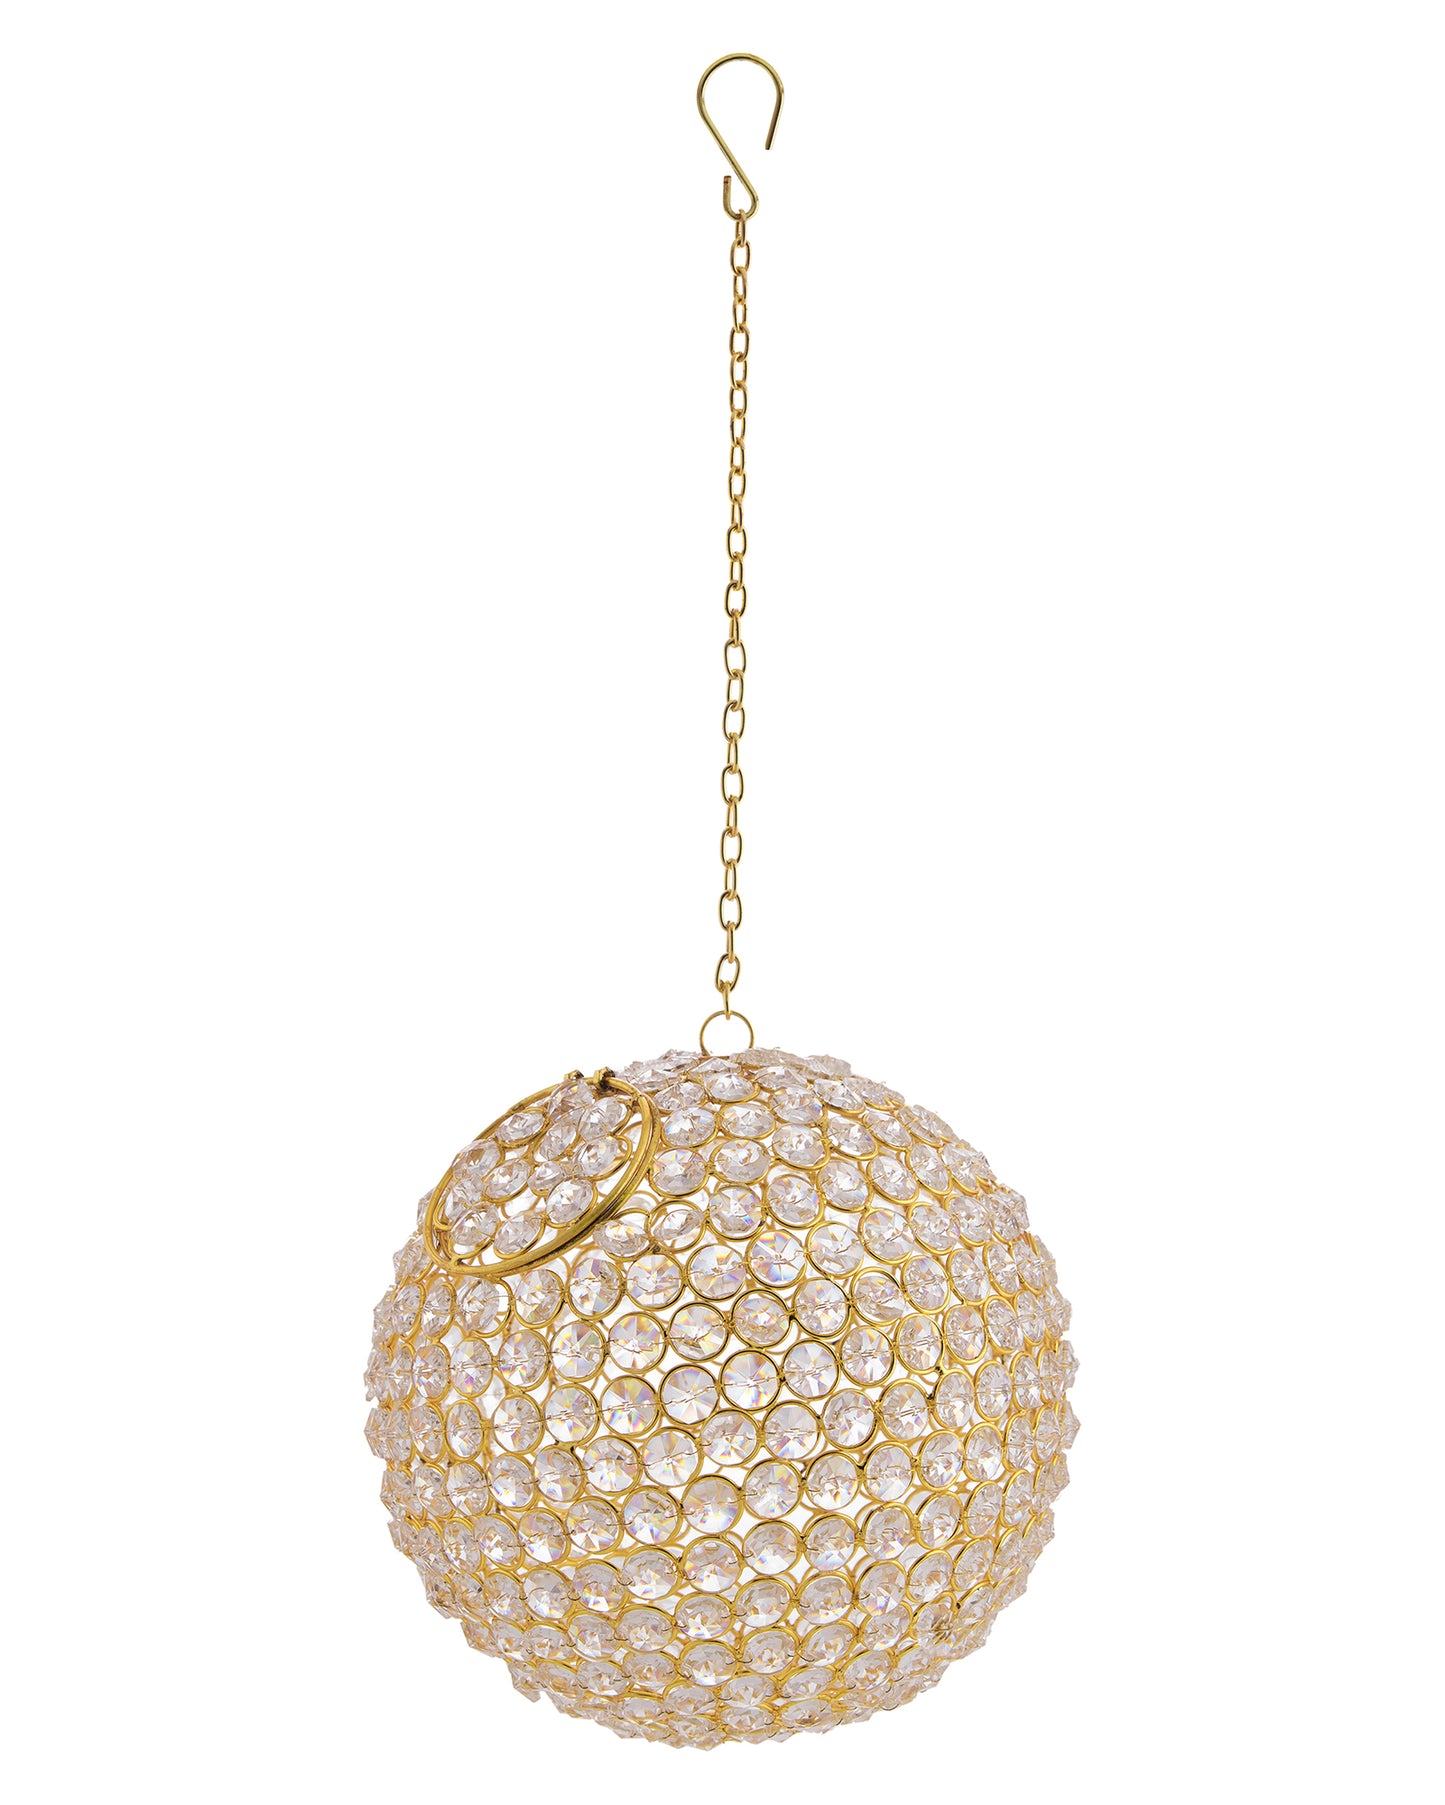 Crystal Hanging Pendant Ball Large